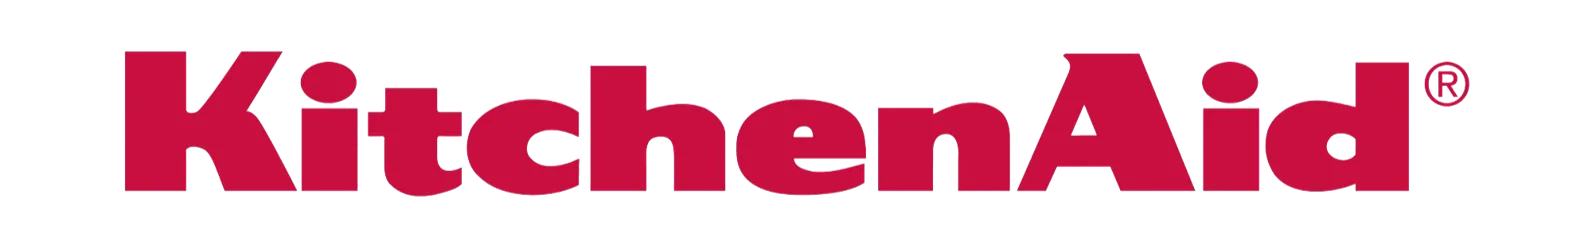 KitchenAid-Logo